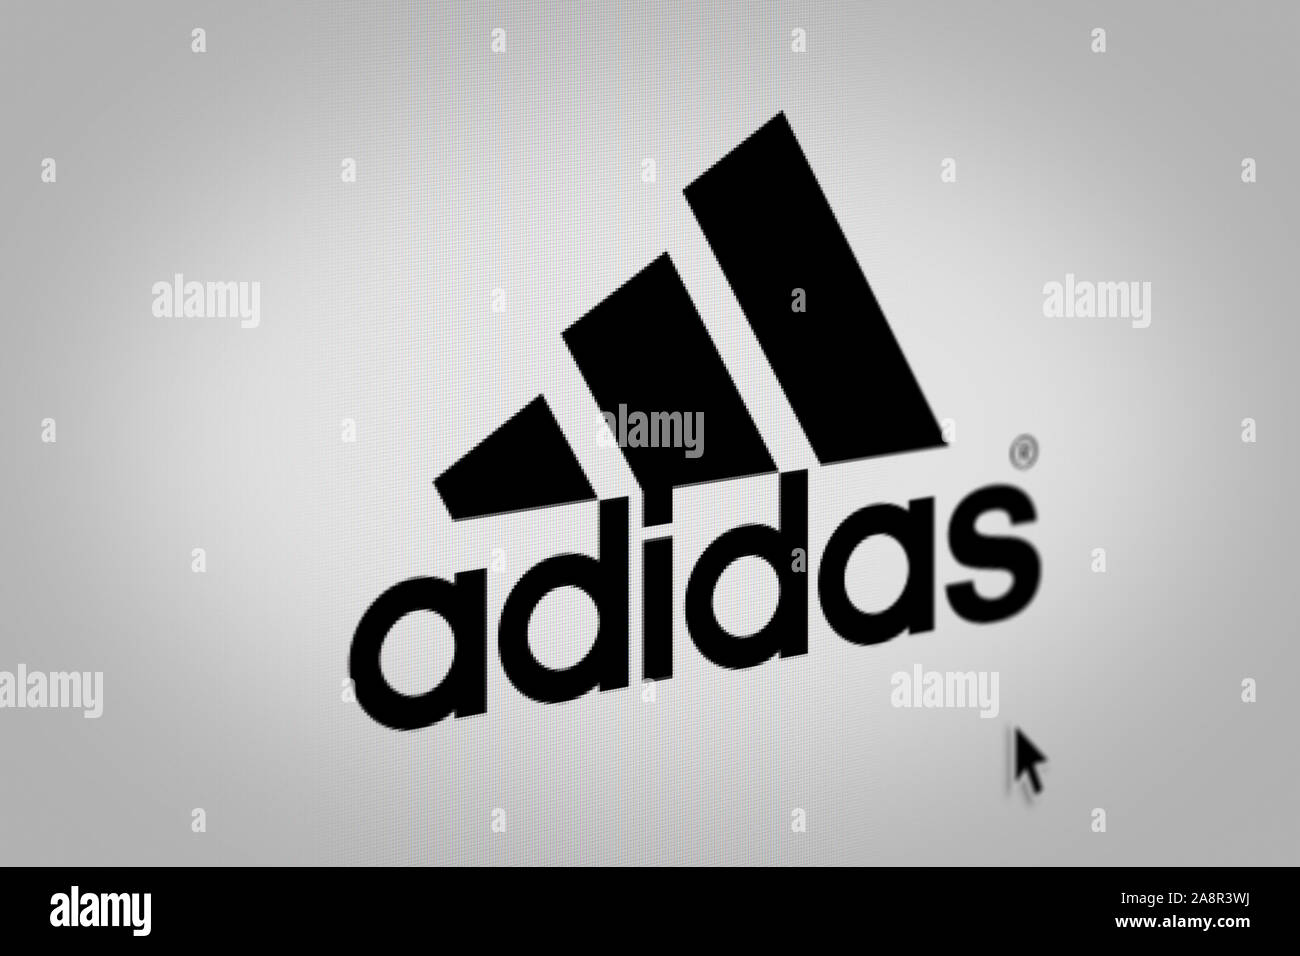 Adidas screenshot hi-res stock photography and images - Alamy